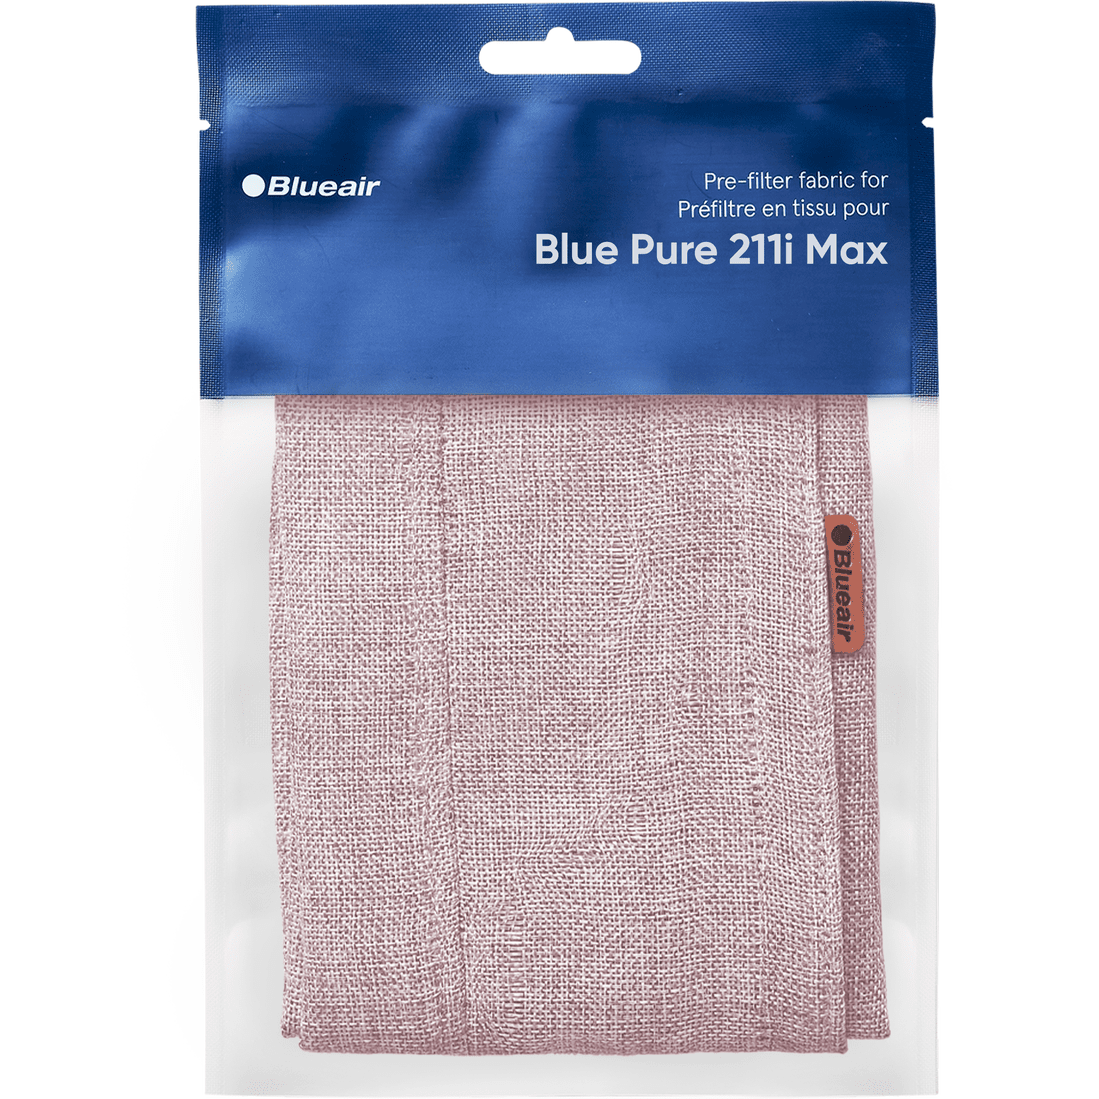 Blueair Blue Pure 211i Max Pre-Filter - Sand